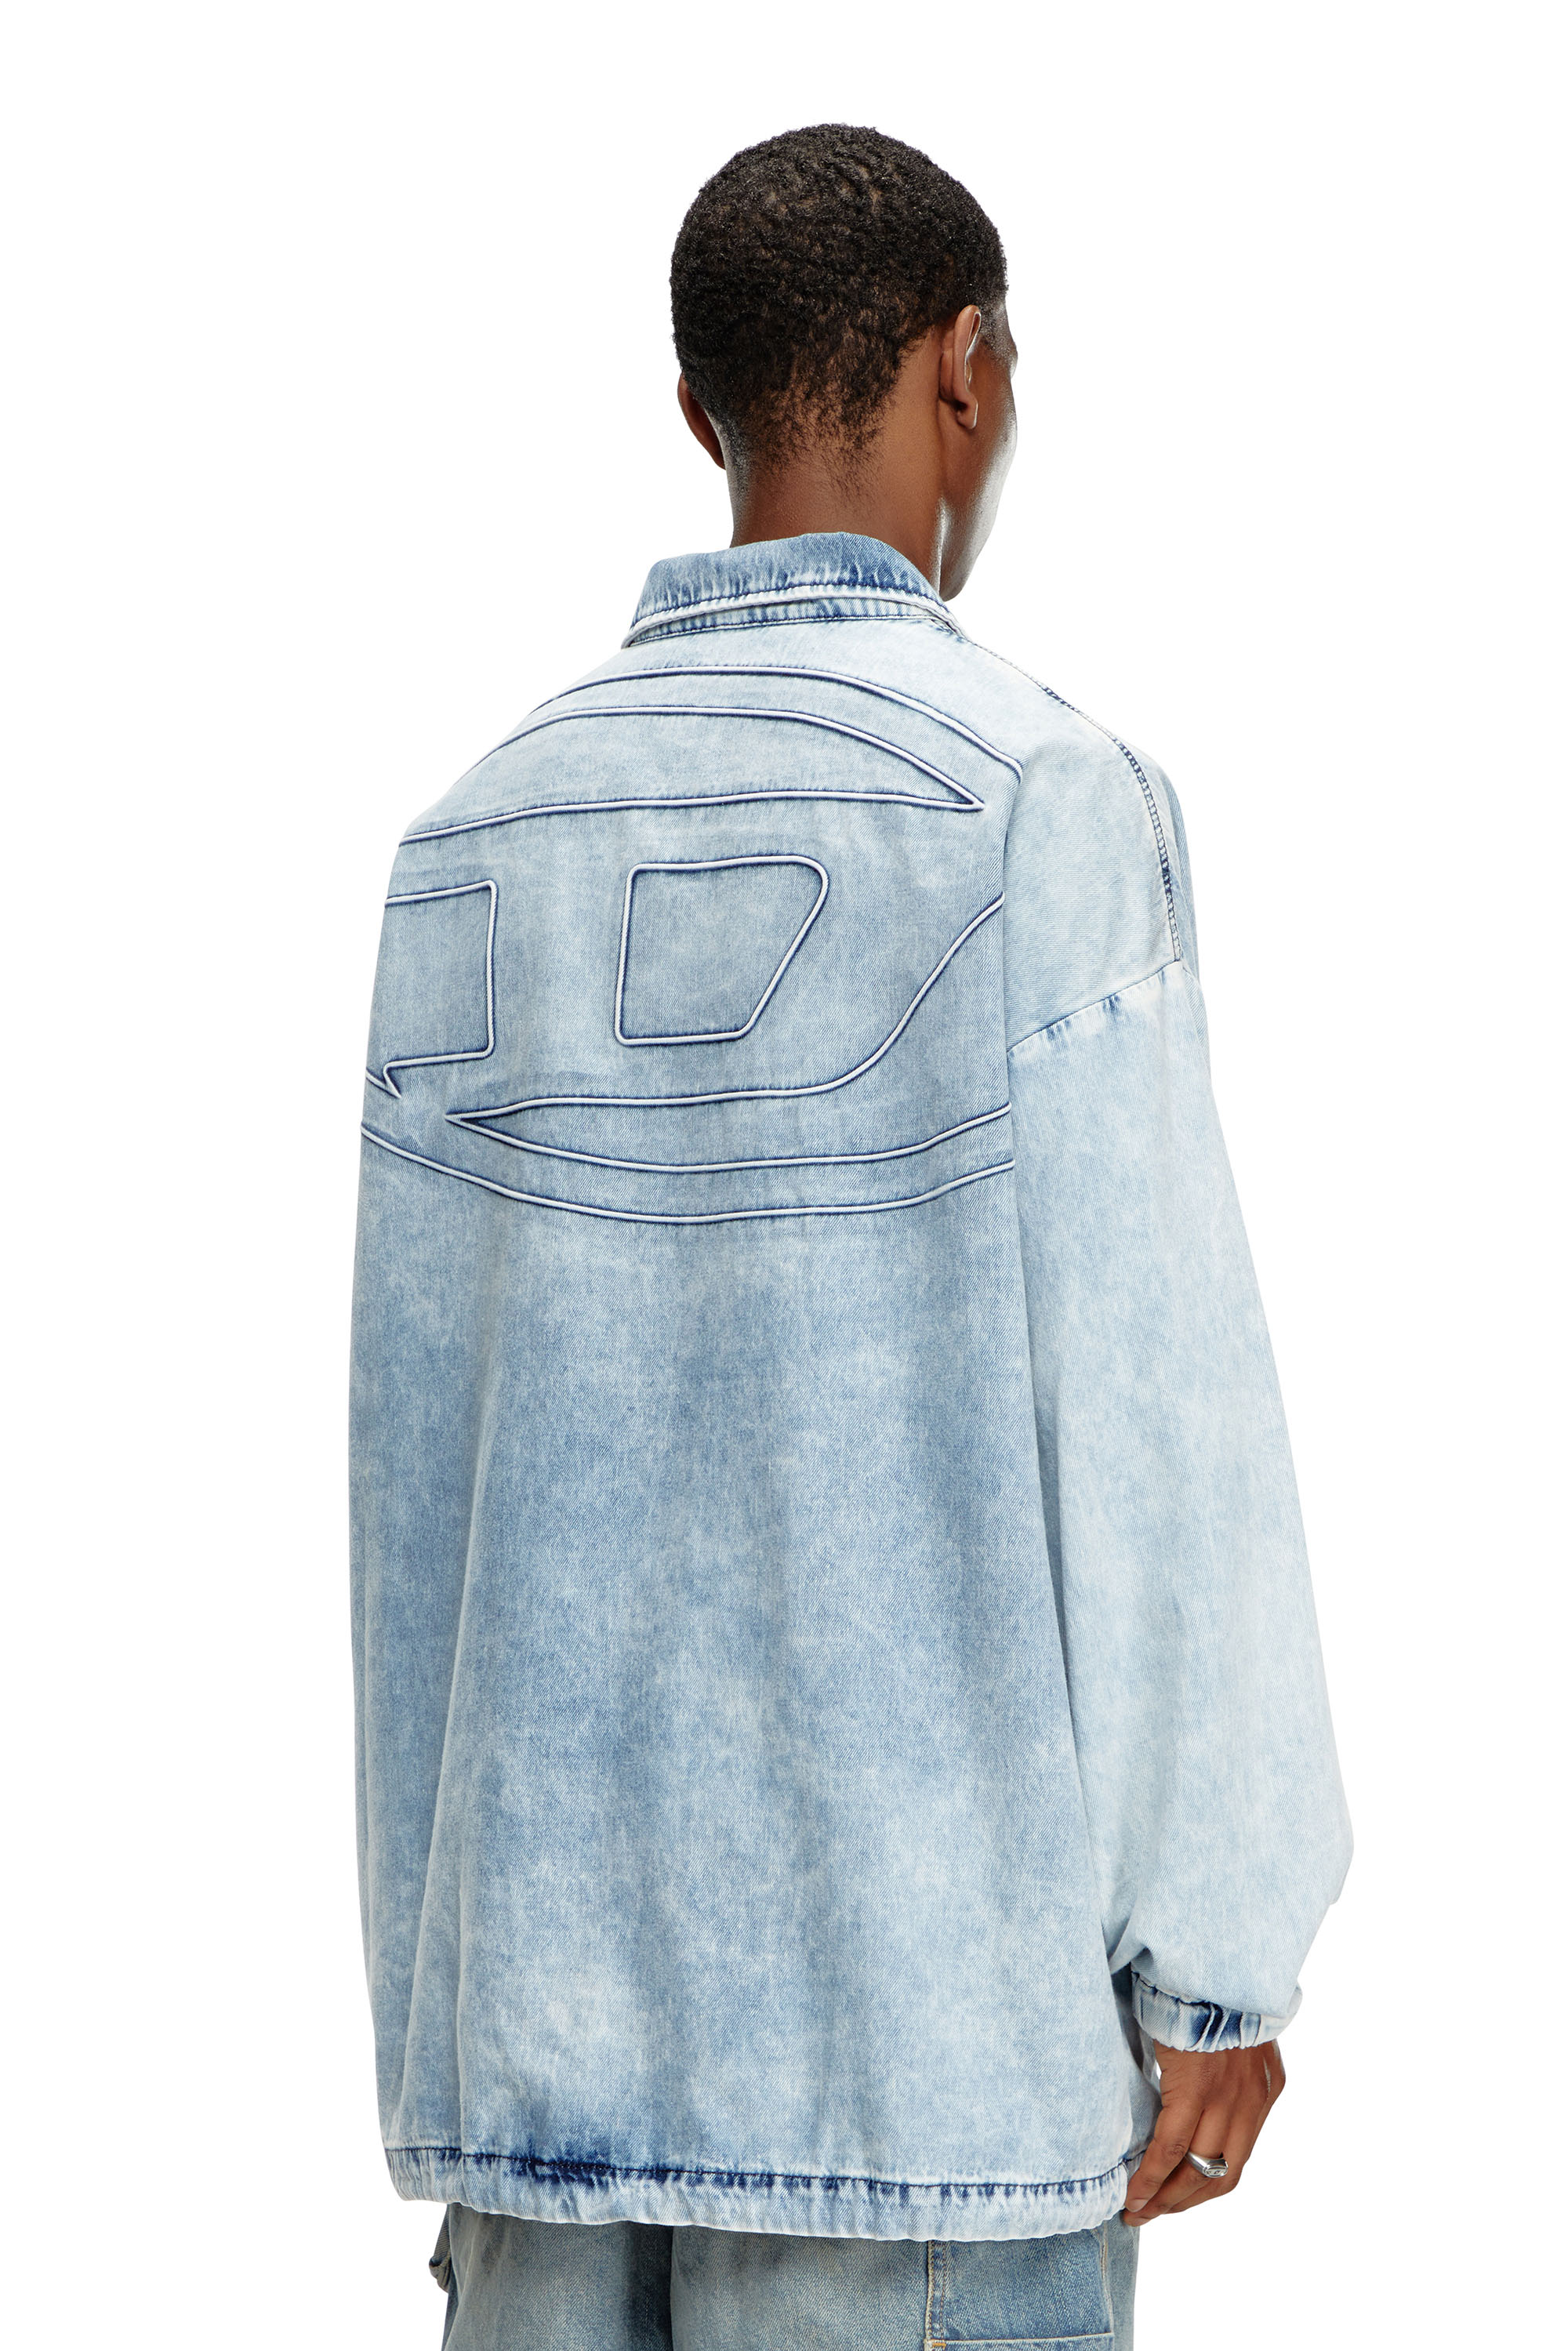 DIESEL】ベストセラー オーバルD コレクション（メンズ）Tシャツ・ジャケット・ベルト・シューズ｜ディーゼル公式オンラインストア